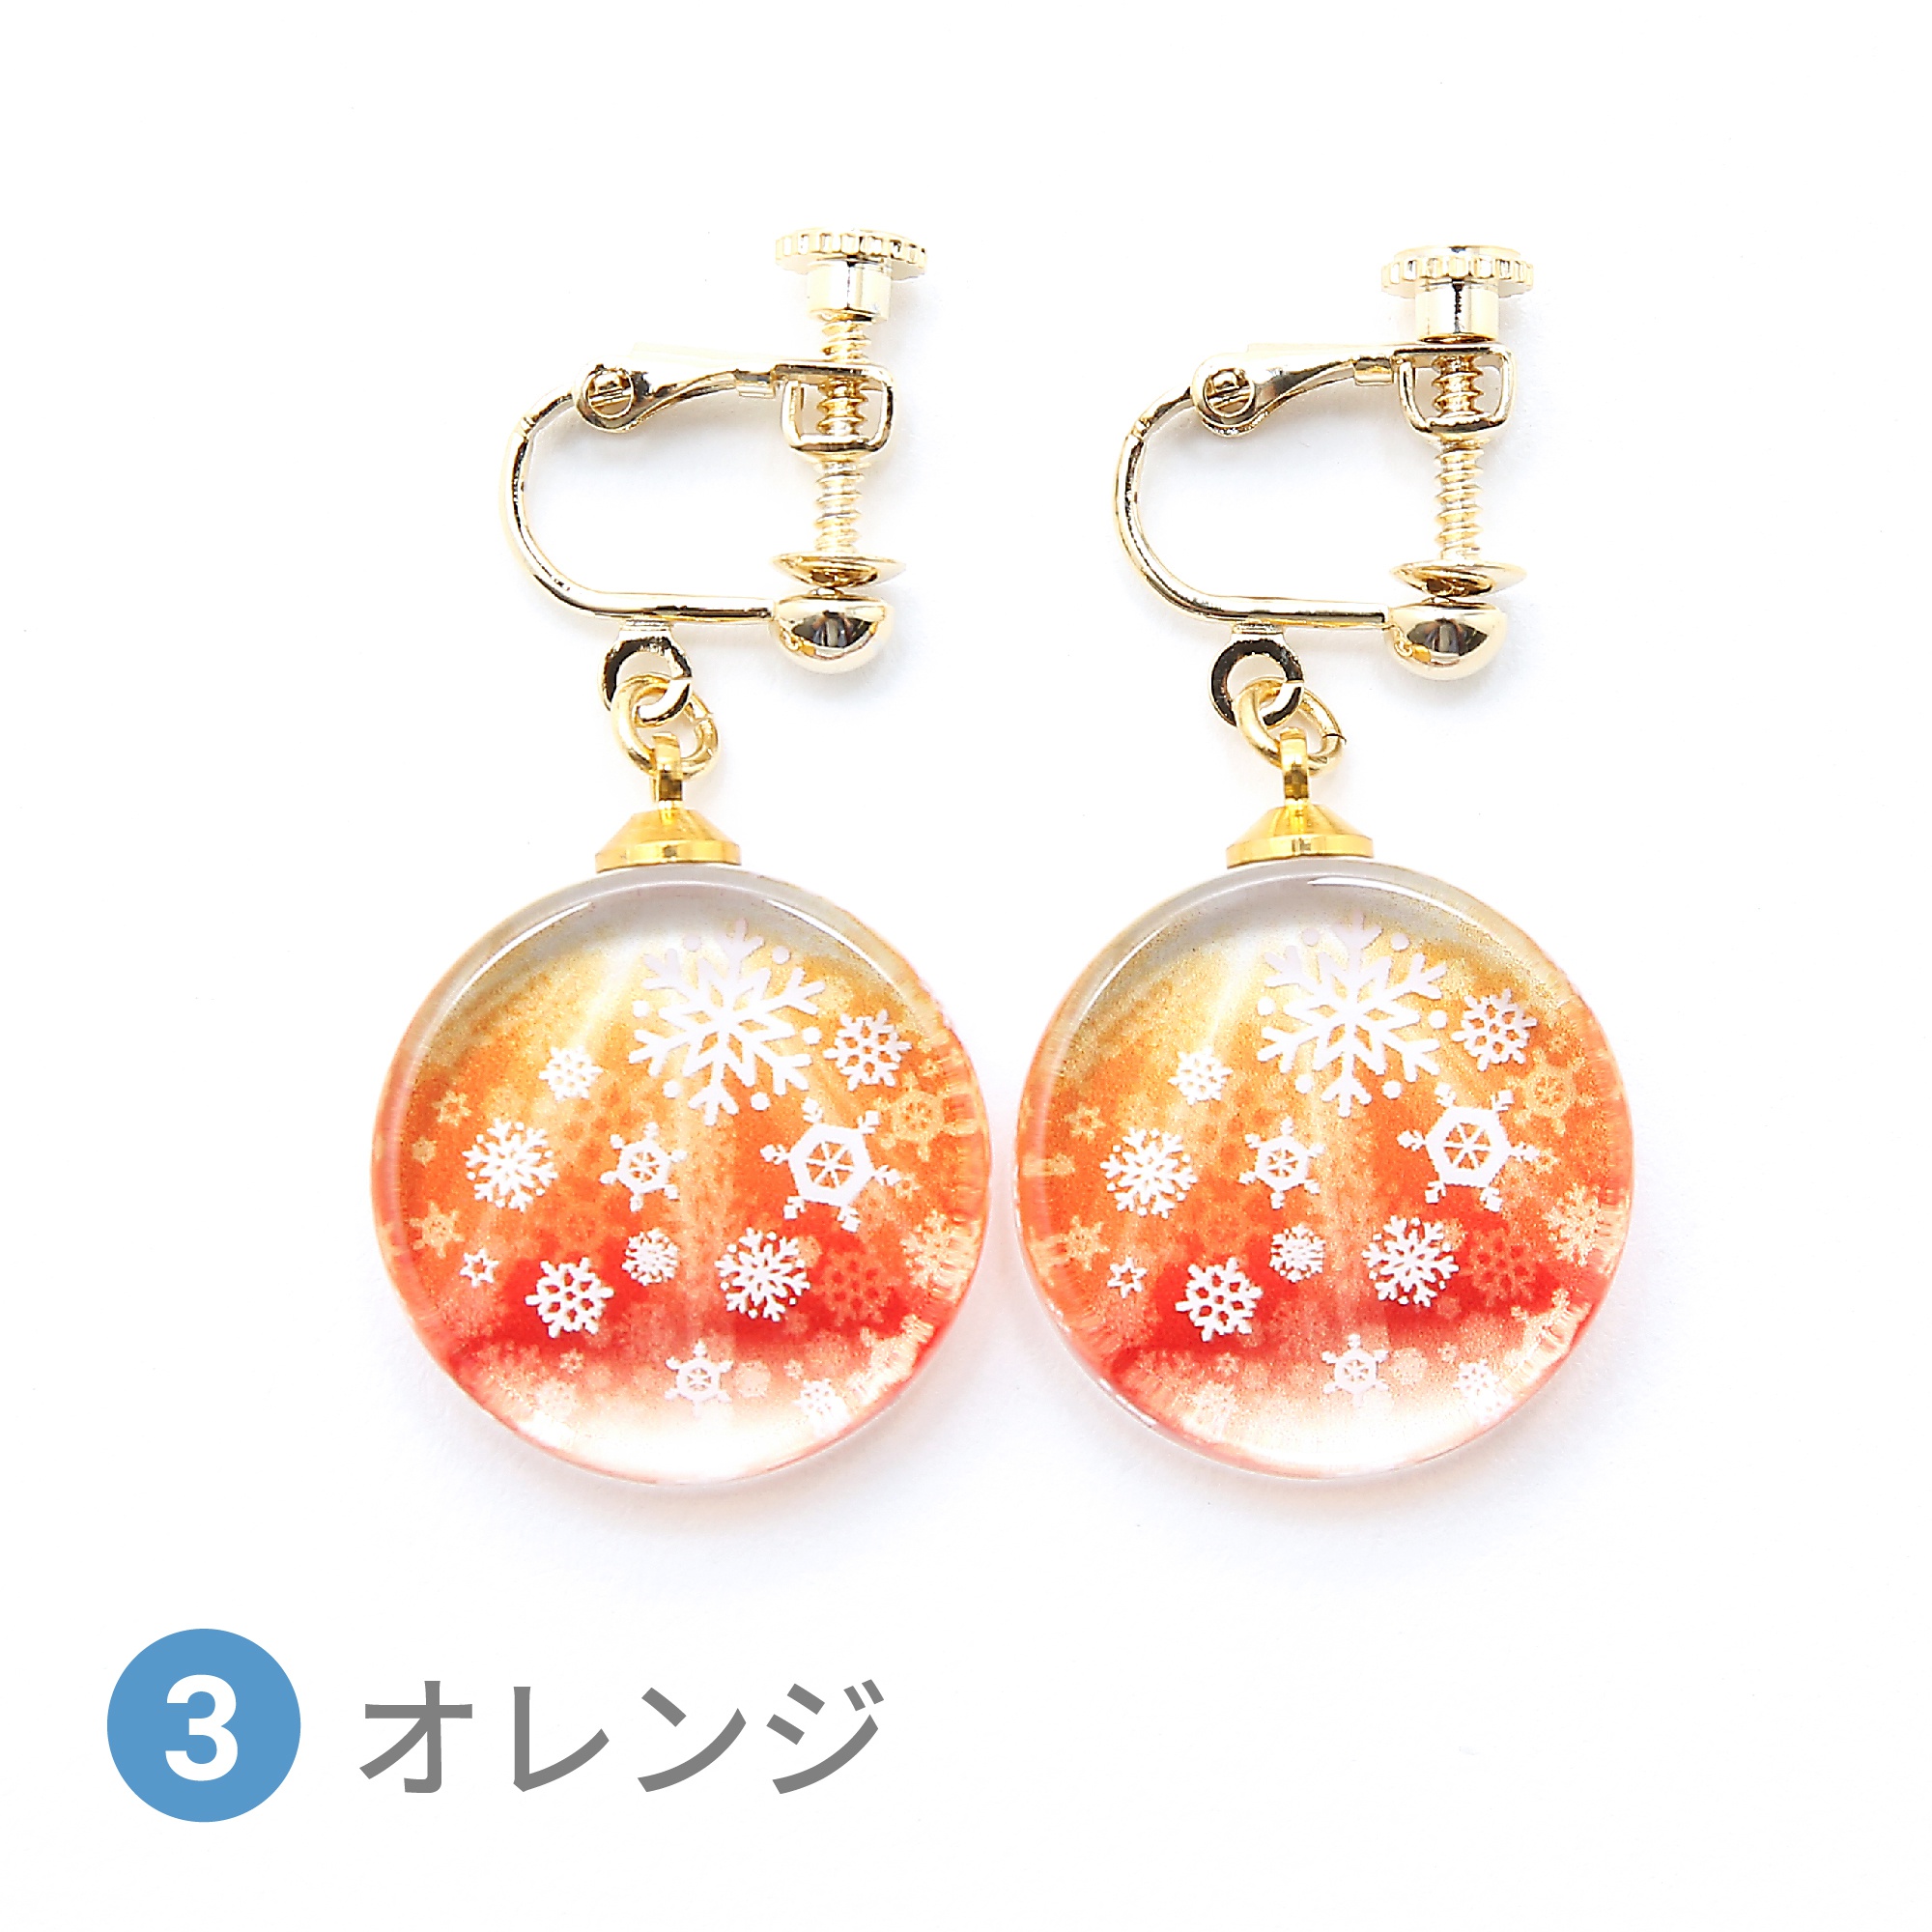 Glass accessories Earring Shiny winter orange round shape